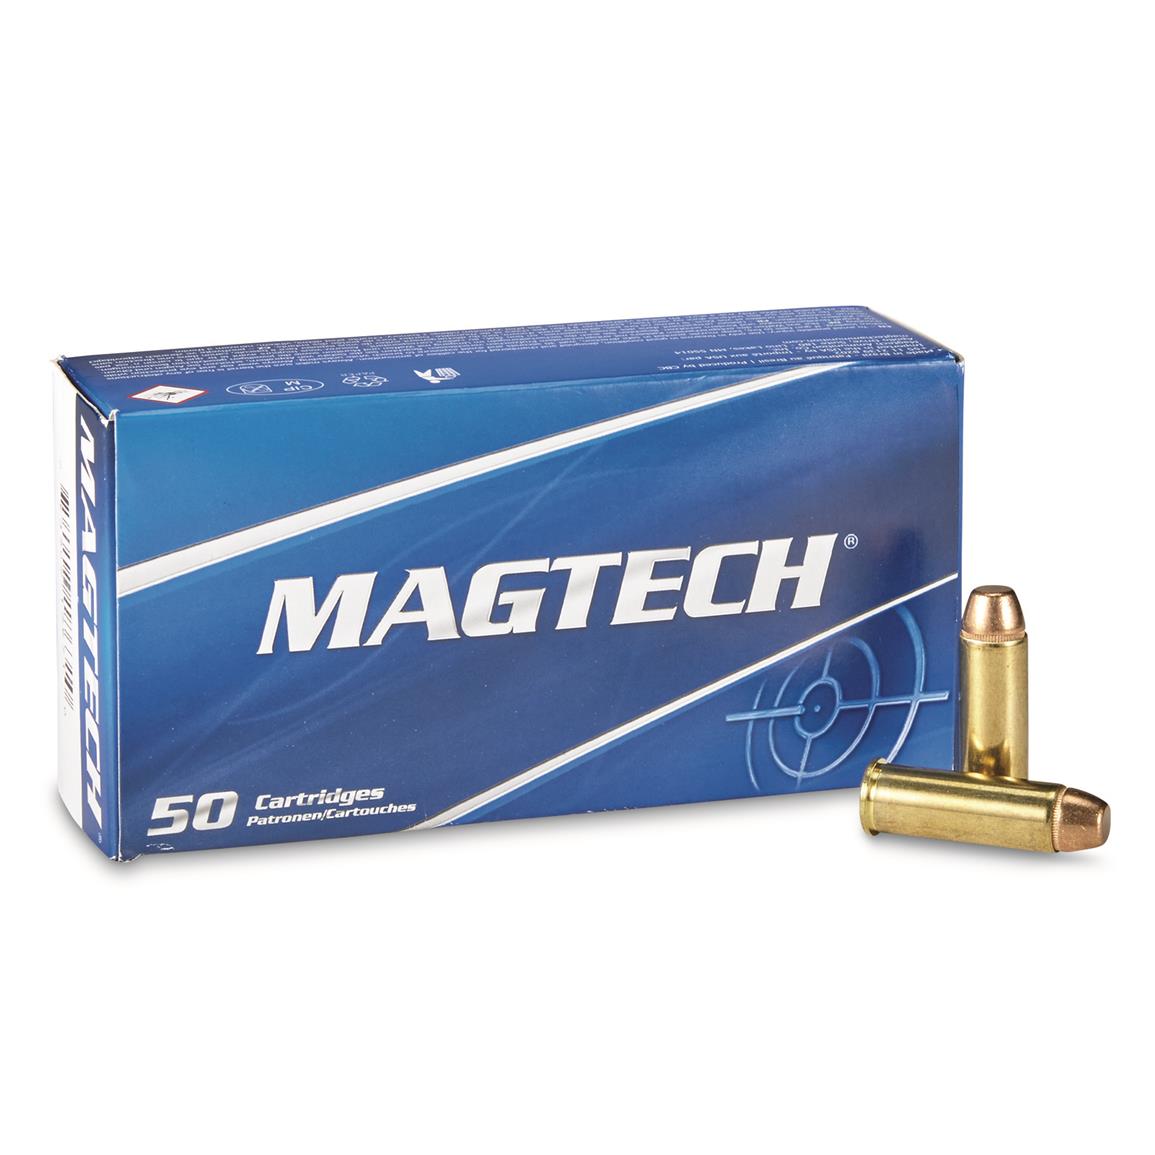 Konkurrere hegn millimeter Magtech, .44 Magnum, FMJ-FP, 240 Grain, 50 Rounds - 85455, .44 Remington Magnum  Ammo at Sportsman's Guide